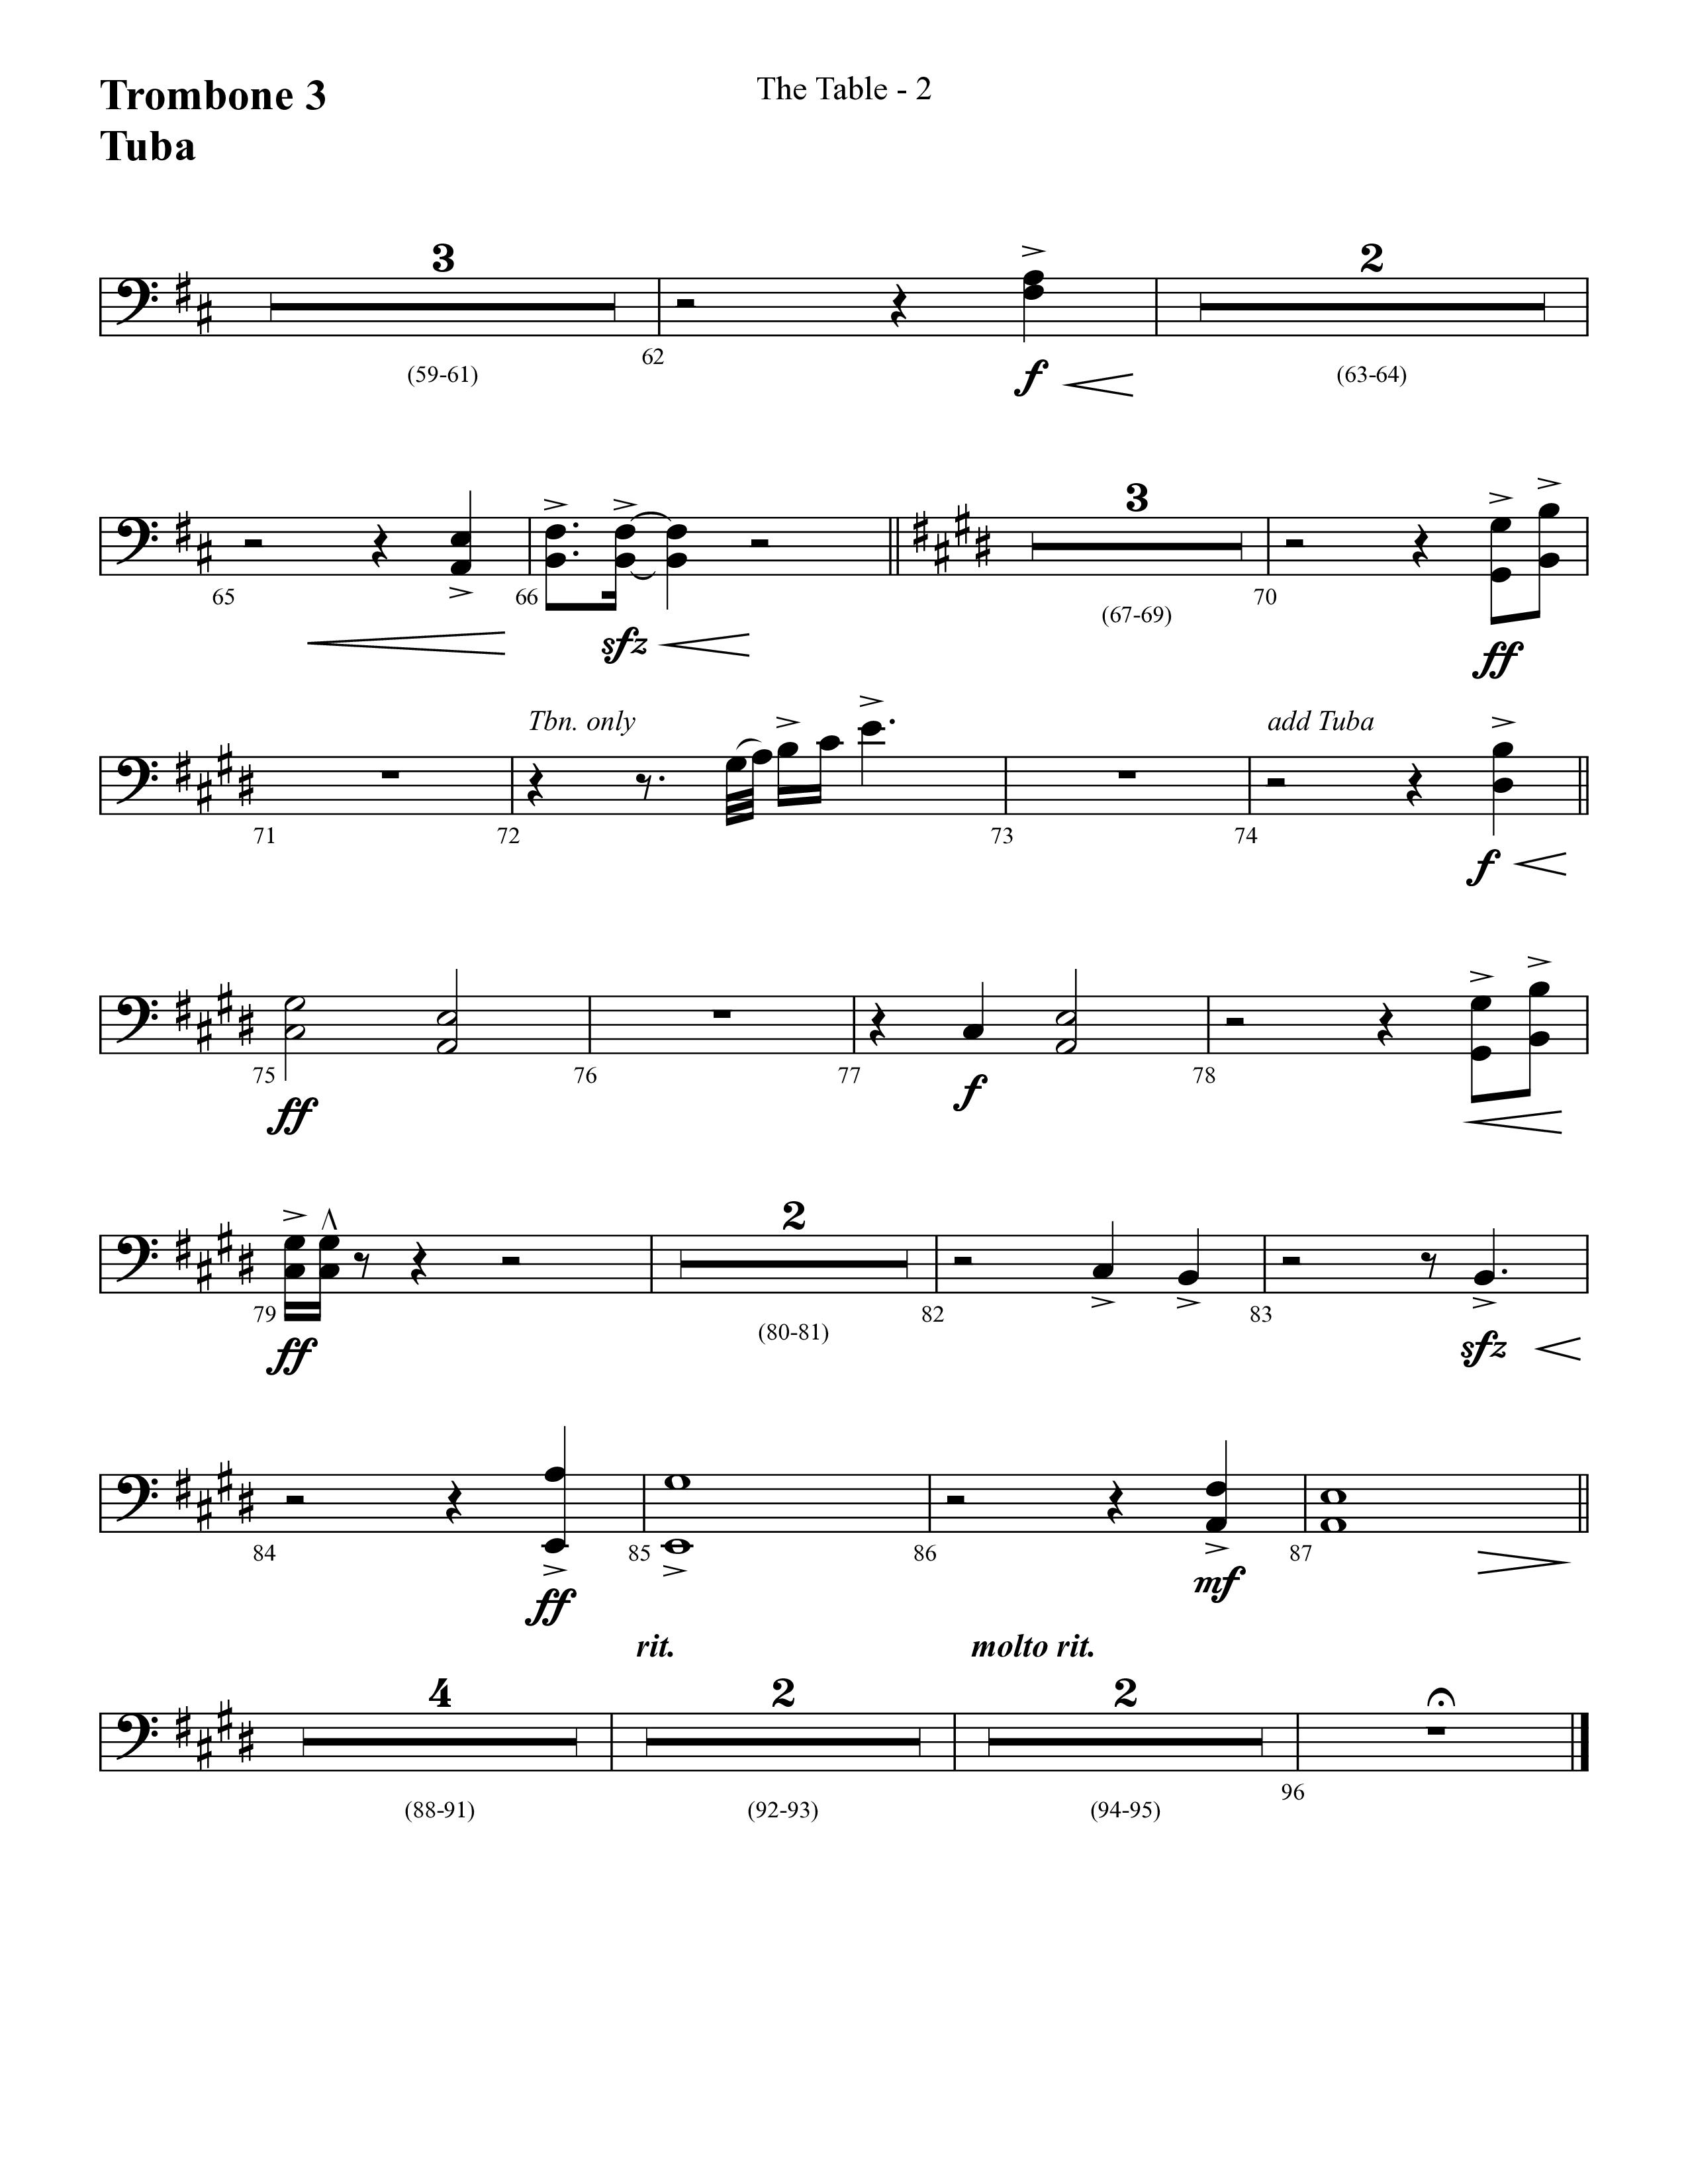 The Table (Choral Anthem SATB) Trombone 3/Tuba (Lifeway Choral / Arr. Cliff Duren)